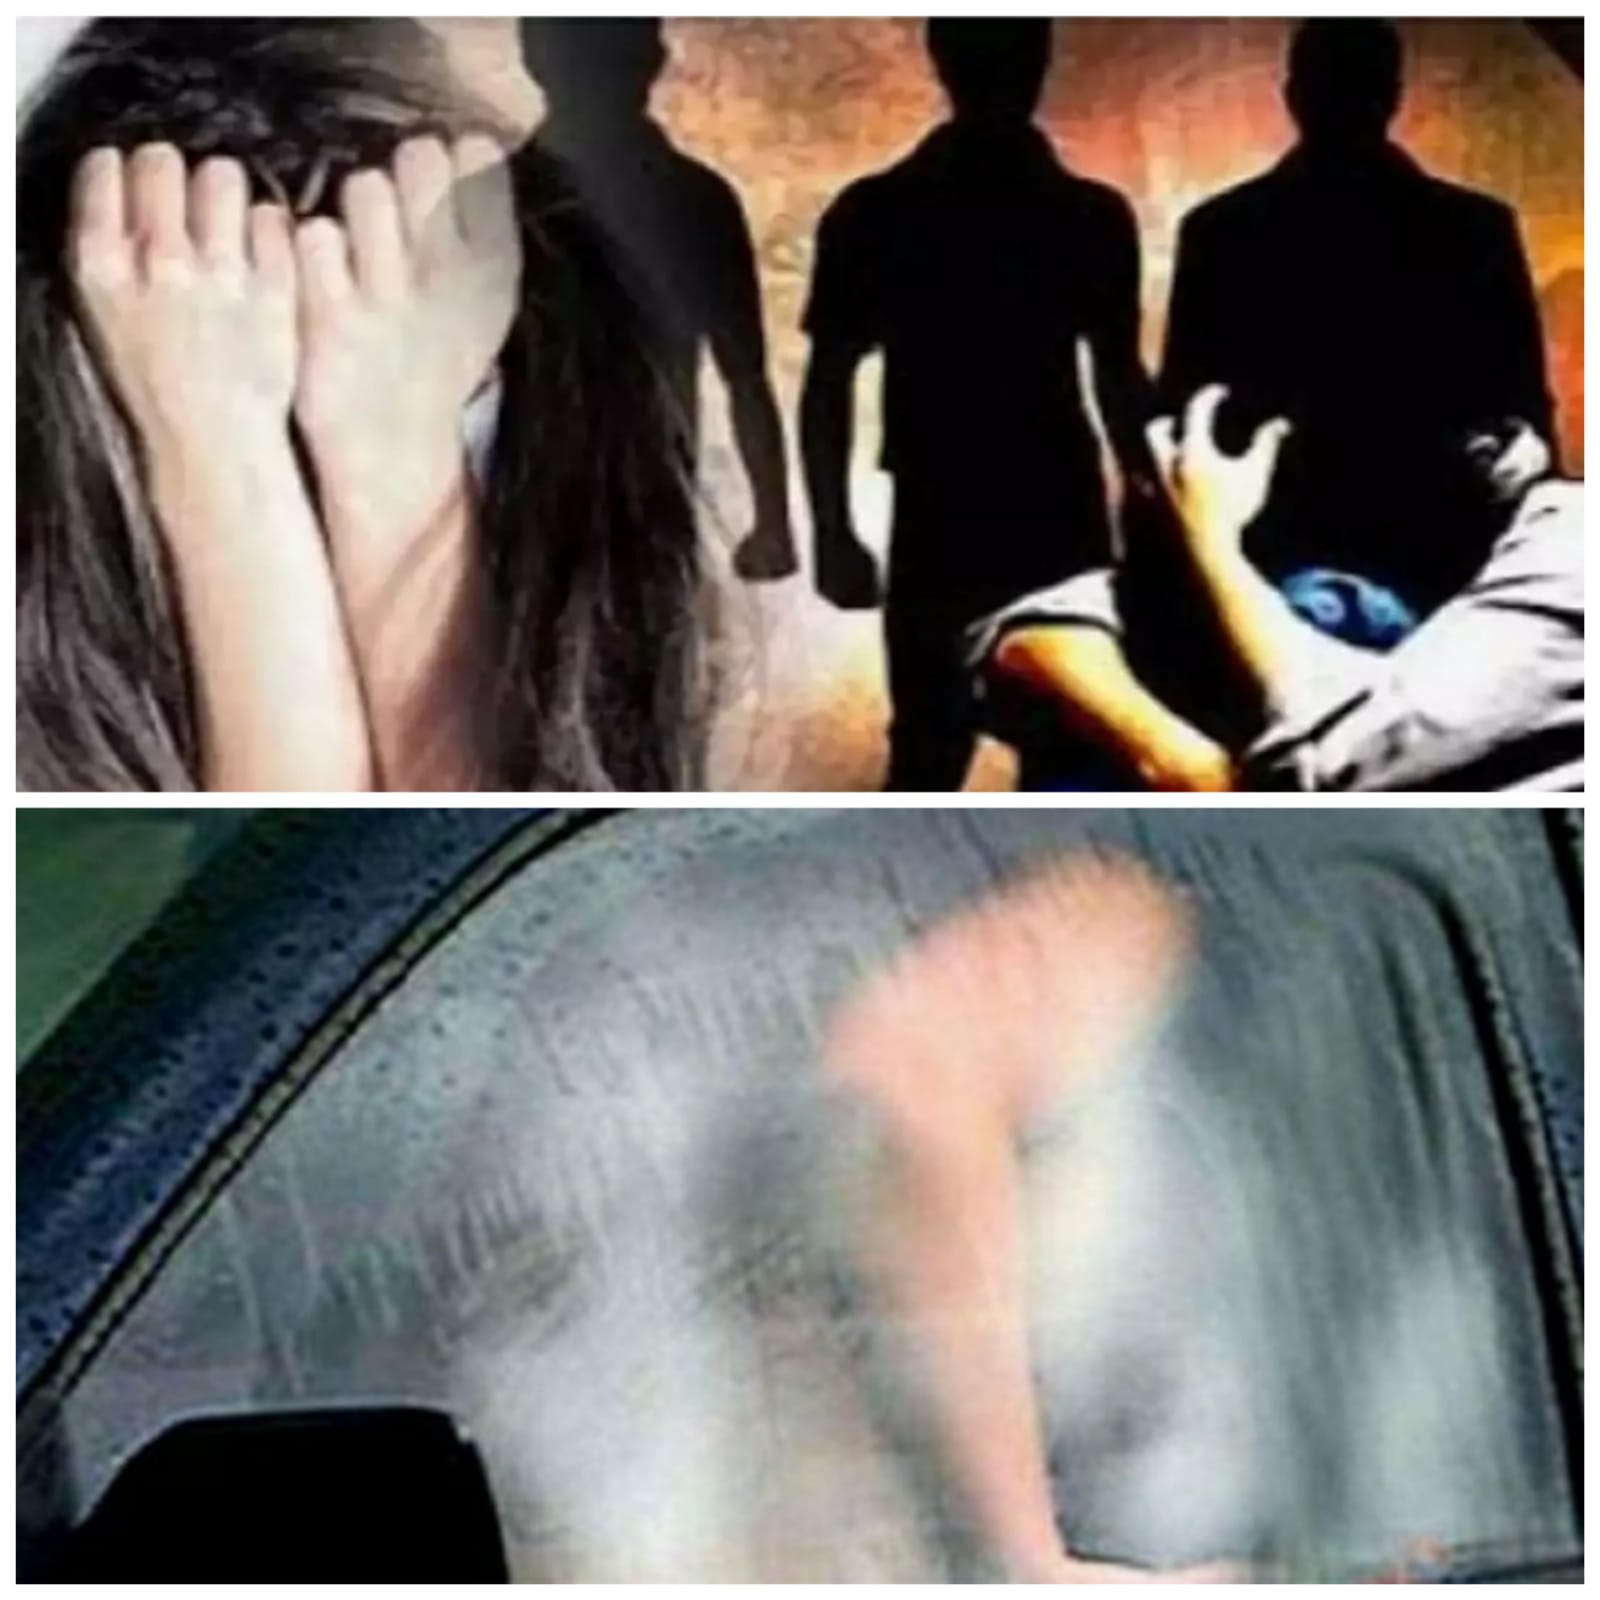 नशीला पदार्थ खिला चलती कार में महिला से सामूहिक दुष्कर्म 